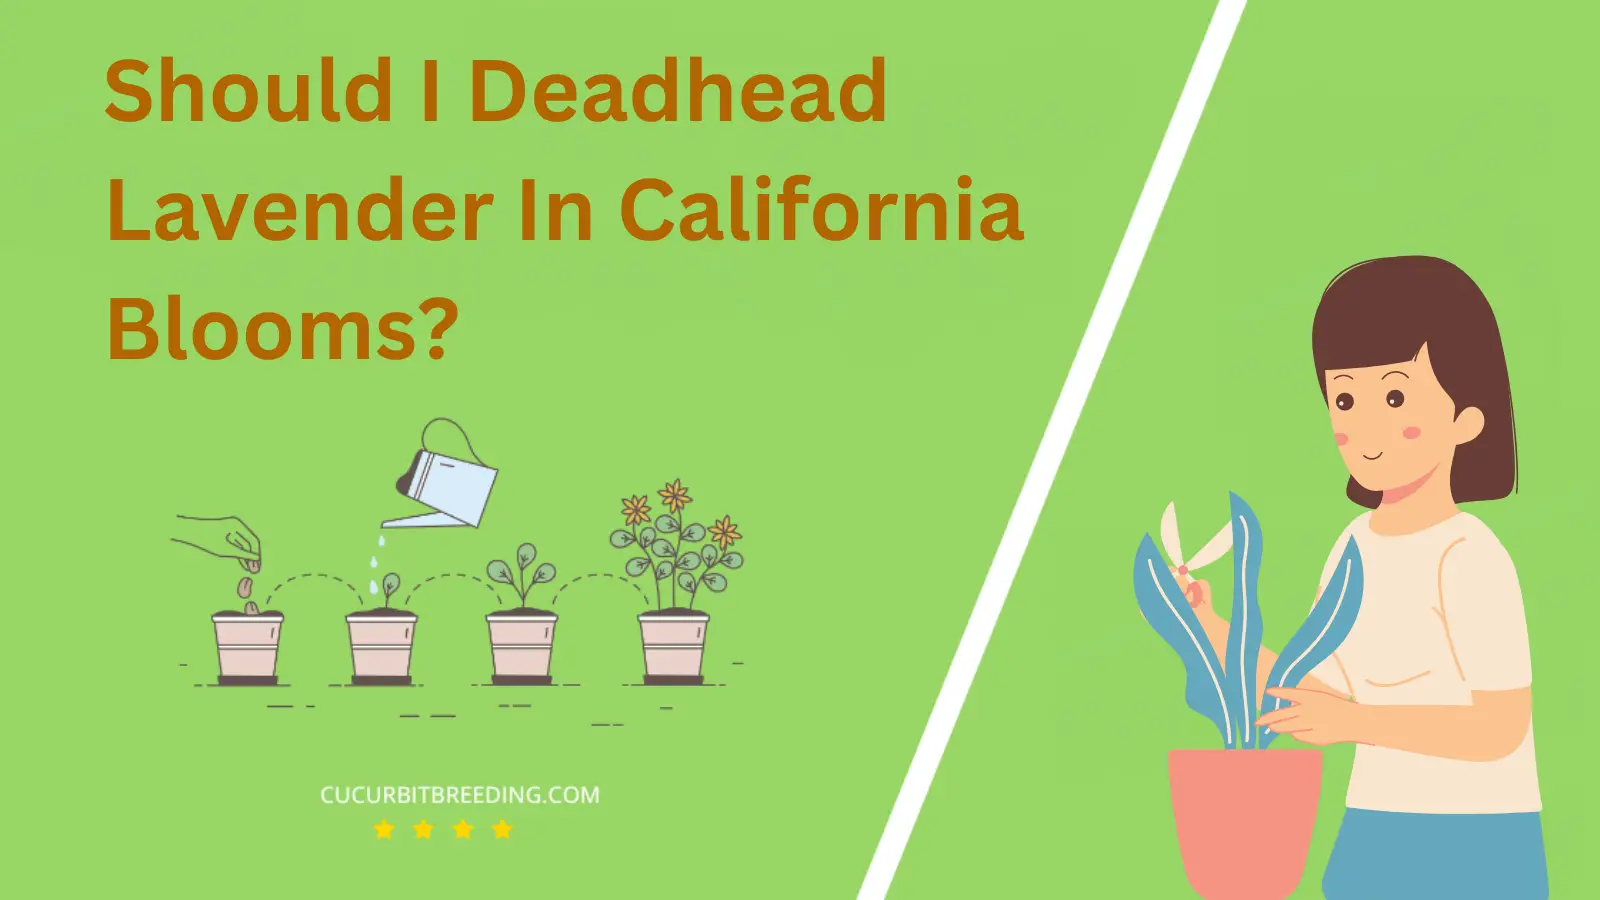 Should I Deadhead Lavender In California Blooms?